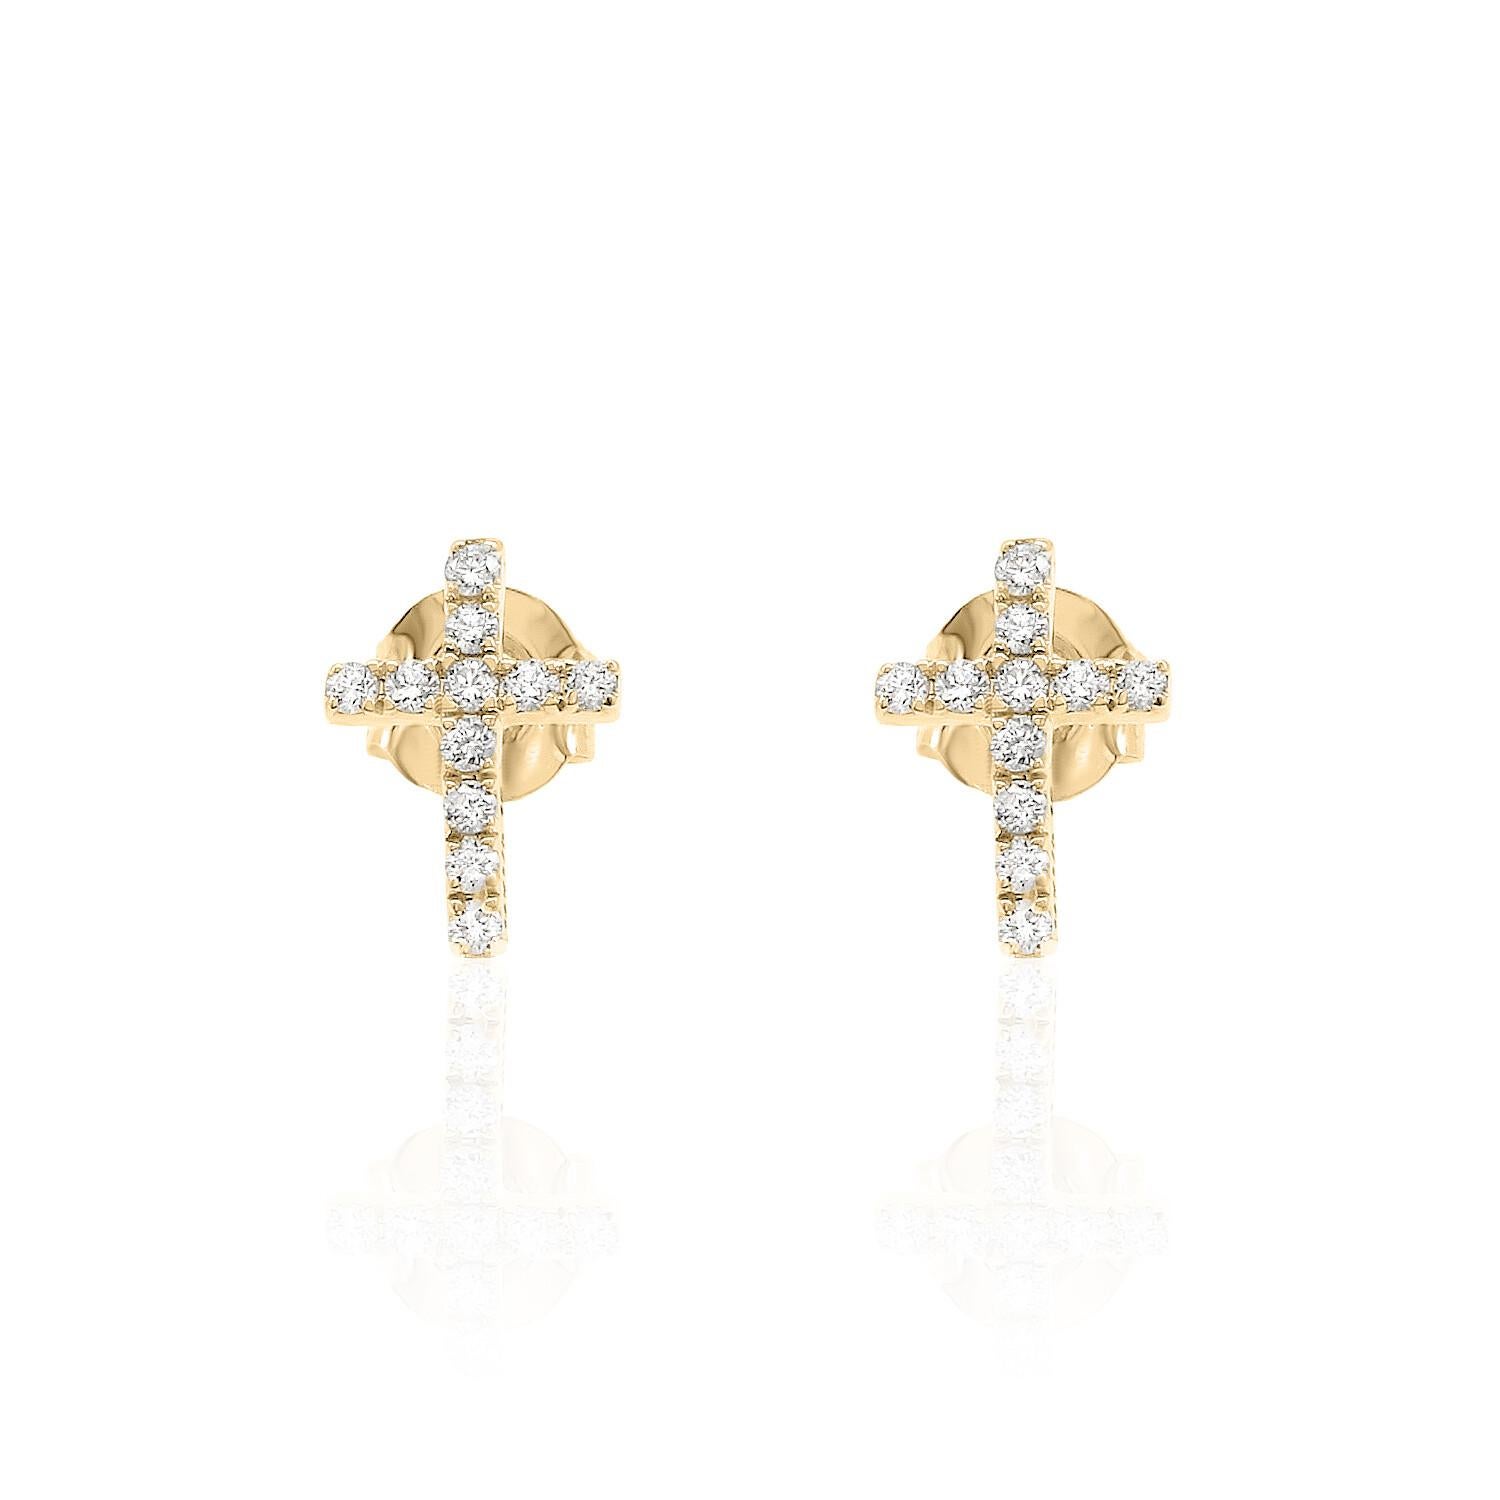 Round Cut Cross Diamond Earrings 14K White, Yellow, and Rose Gold